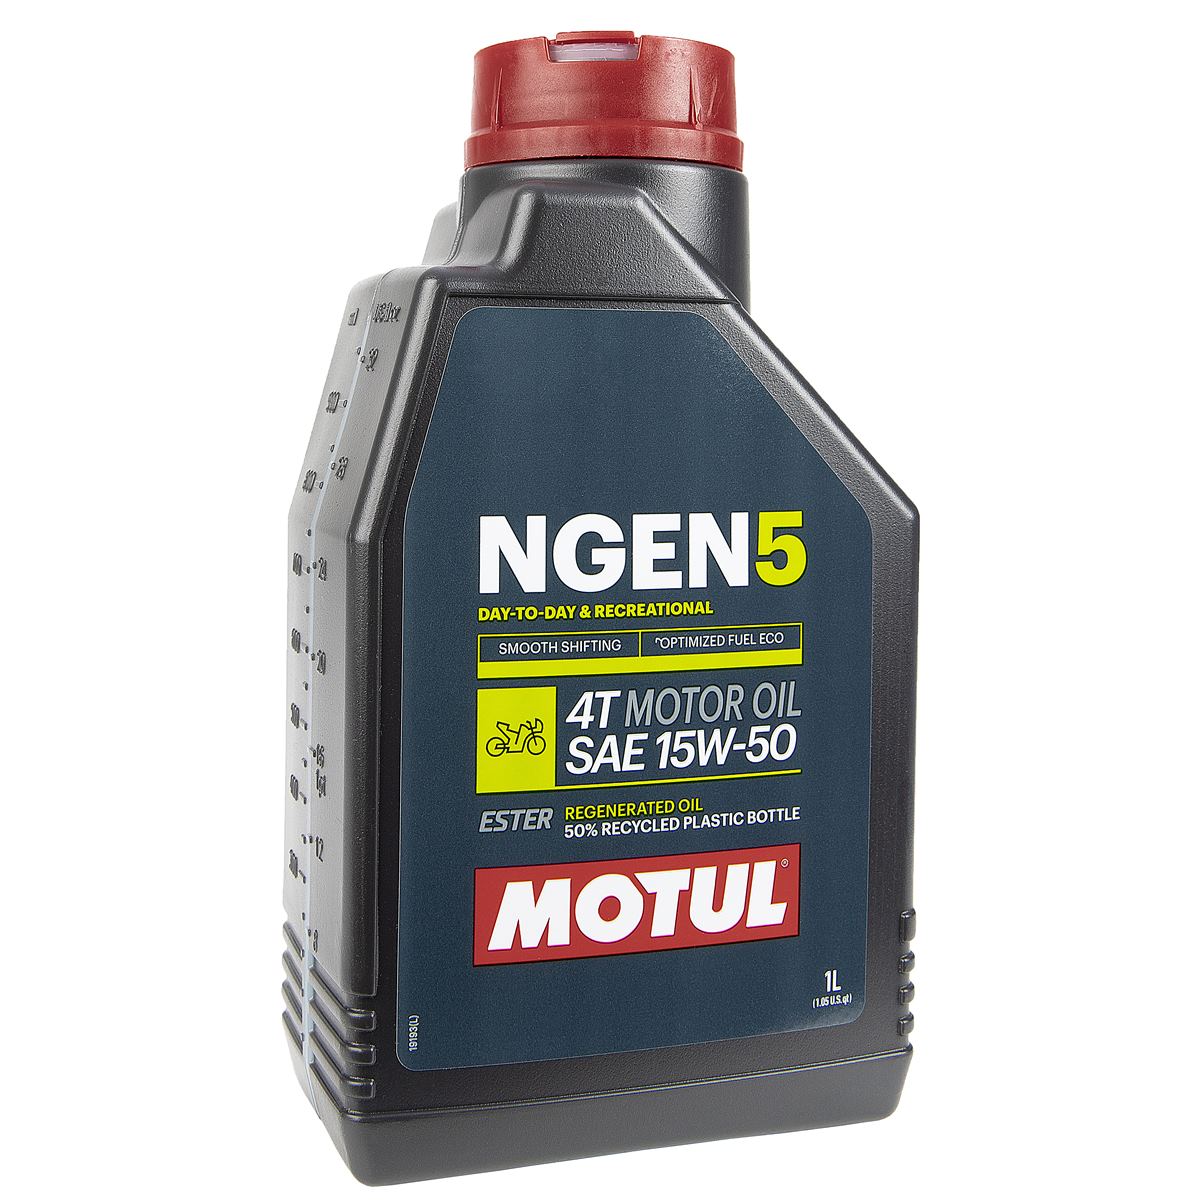 https://www.maciag-offroad.de/shop/artikelbilder/normal/157187/motul-motorenoel-motor-oil-ngen-5-1.jpg